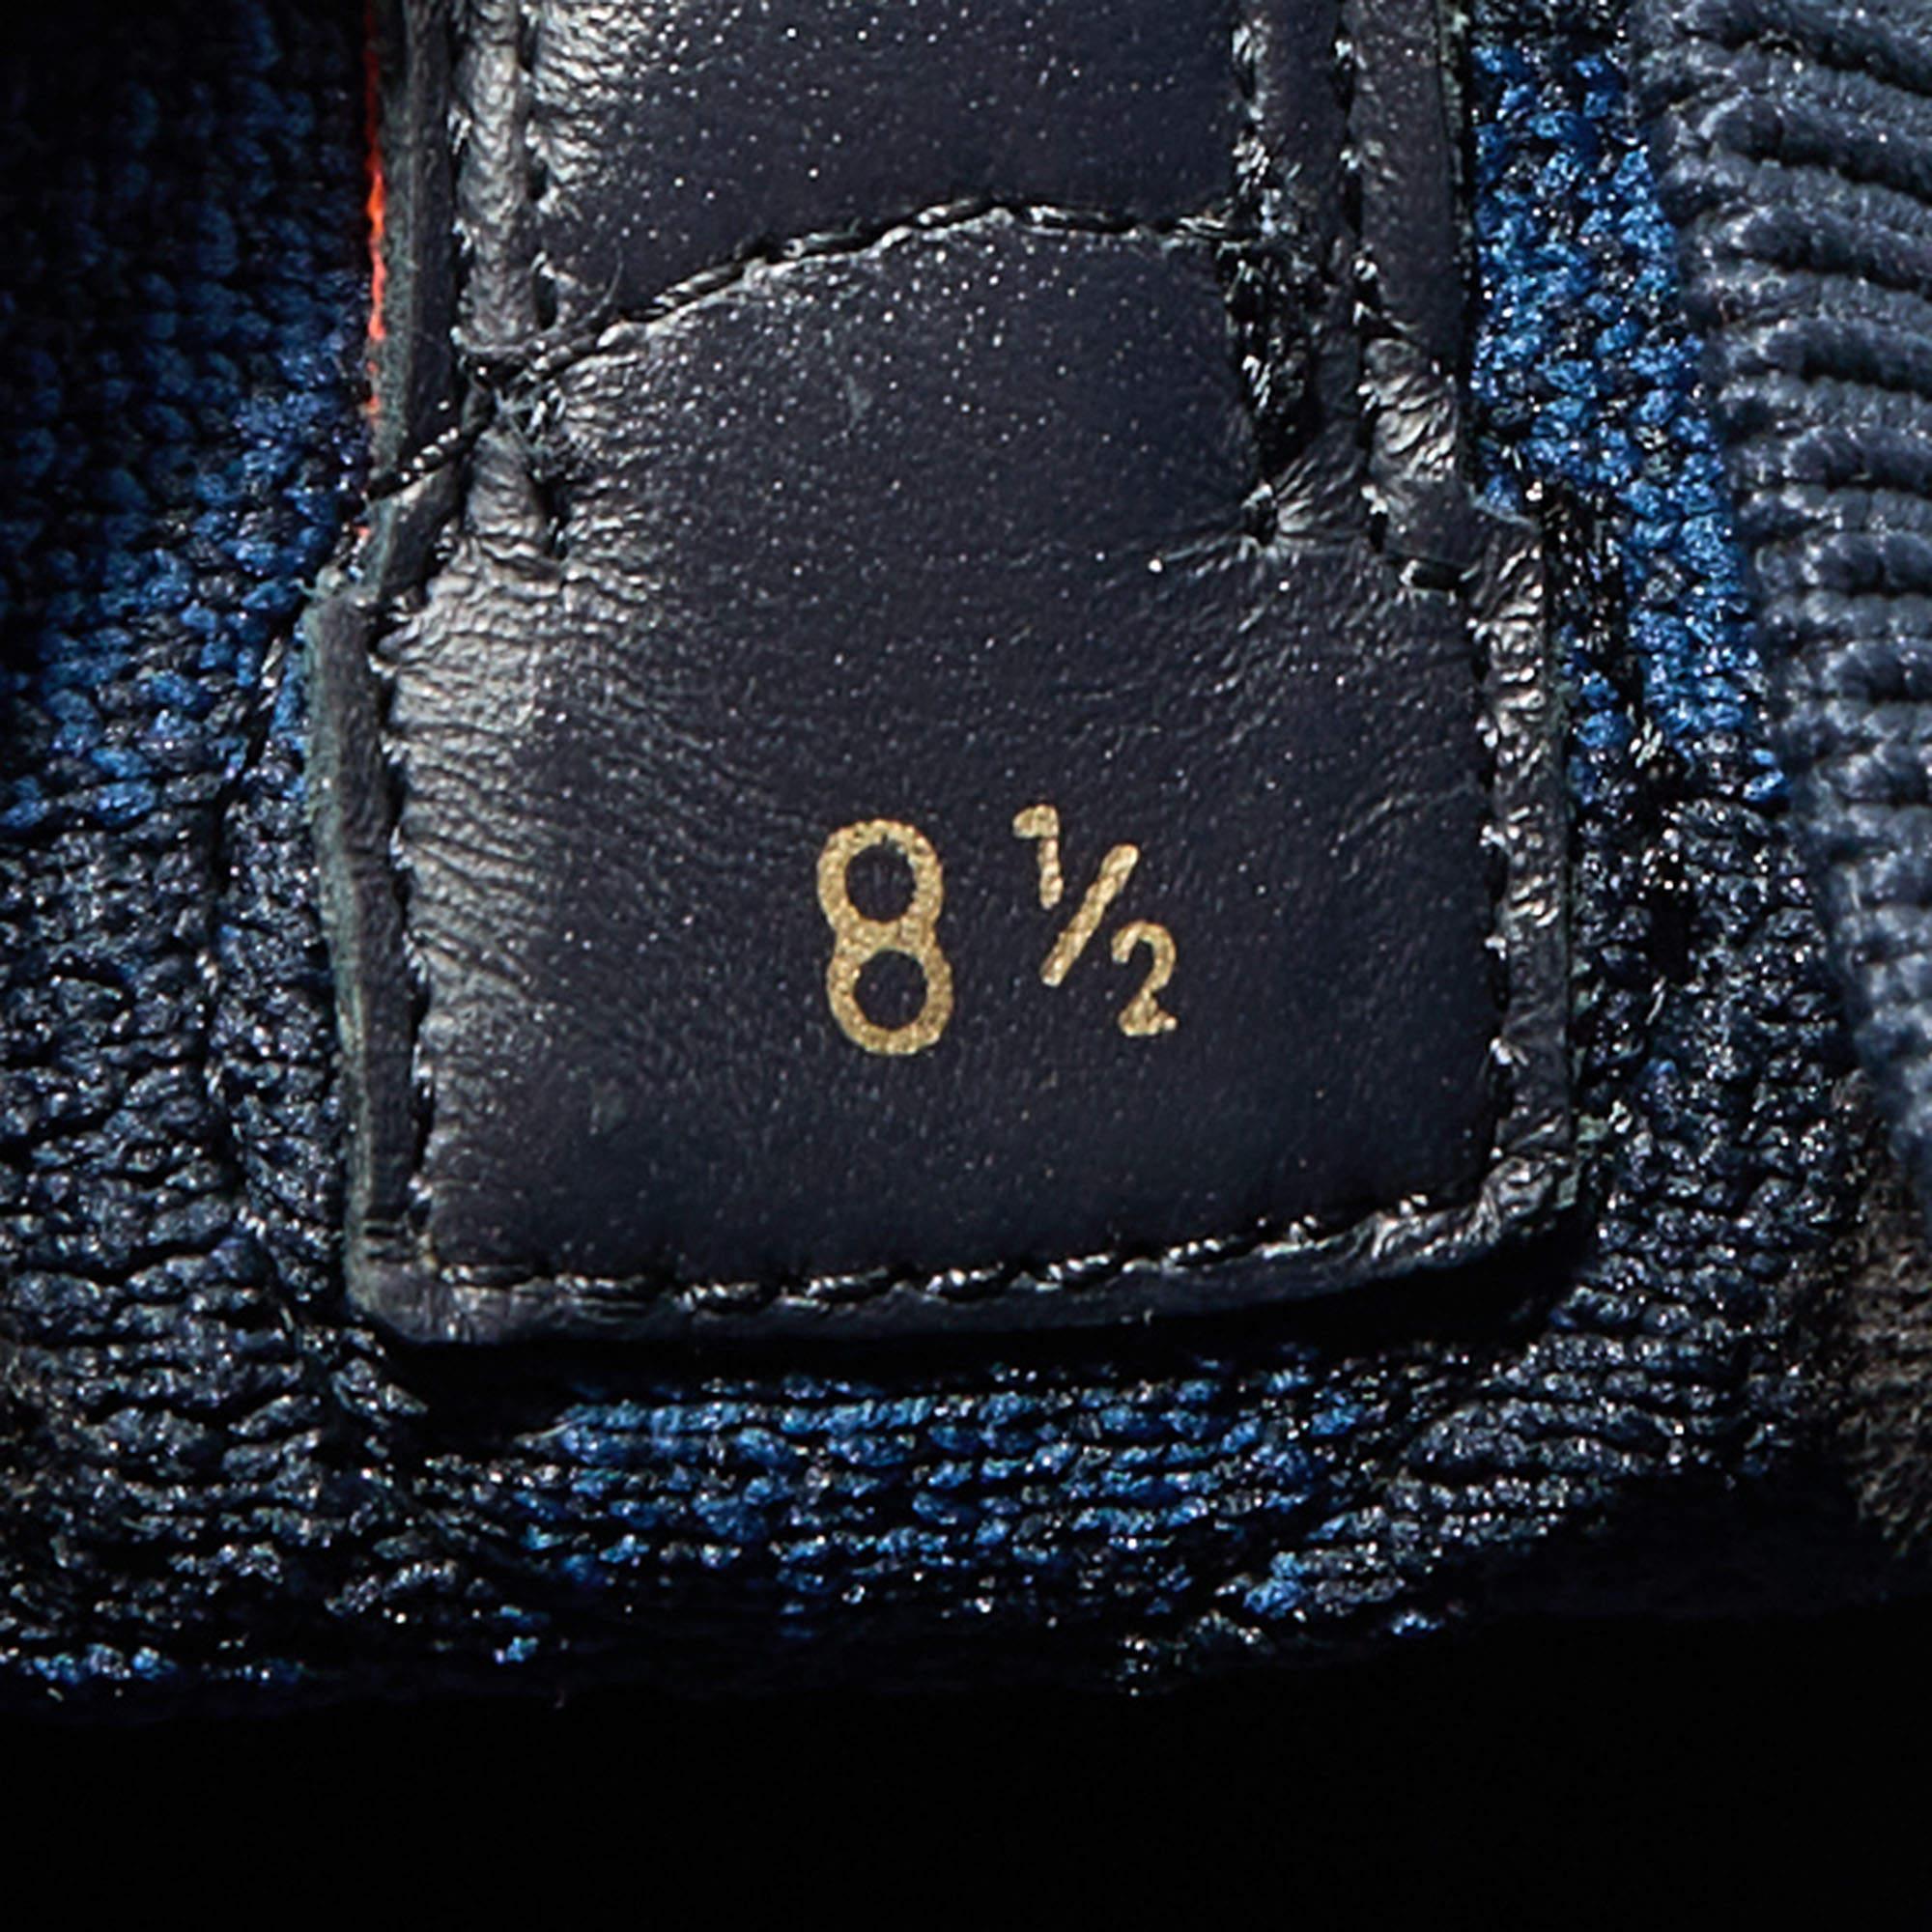 Louis Vuitton Damier Knit Fabric Fastlane Low Top Sneakers Size 42.5 1